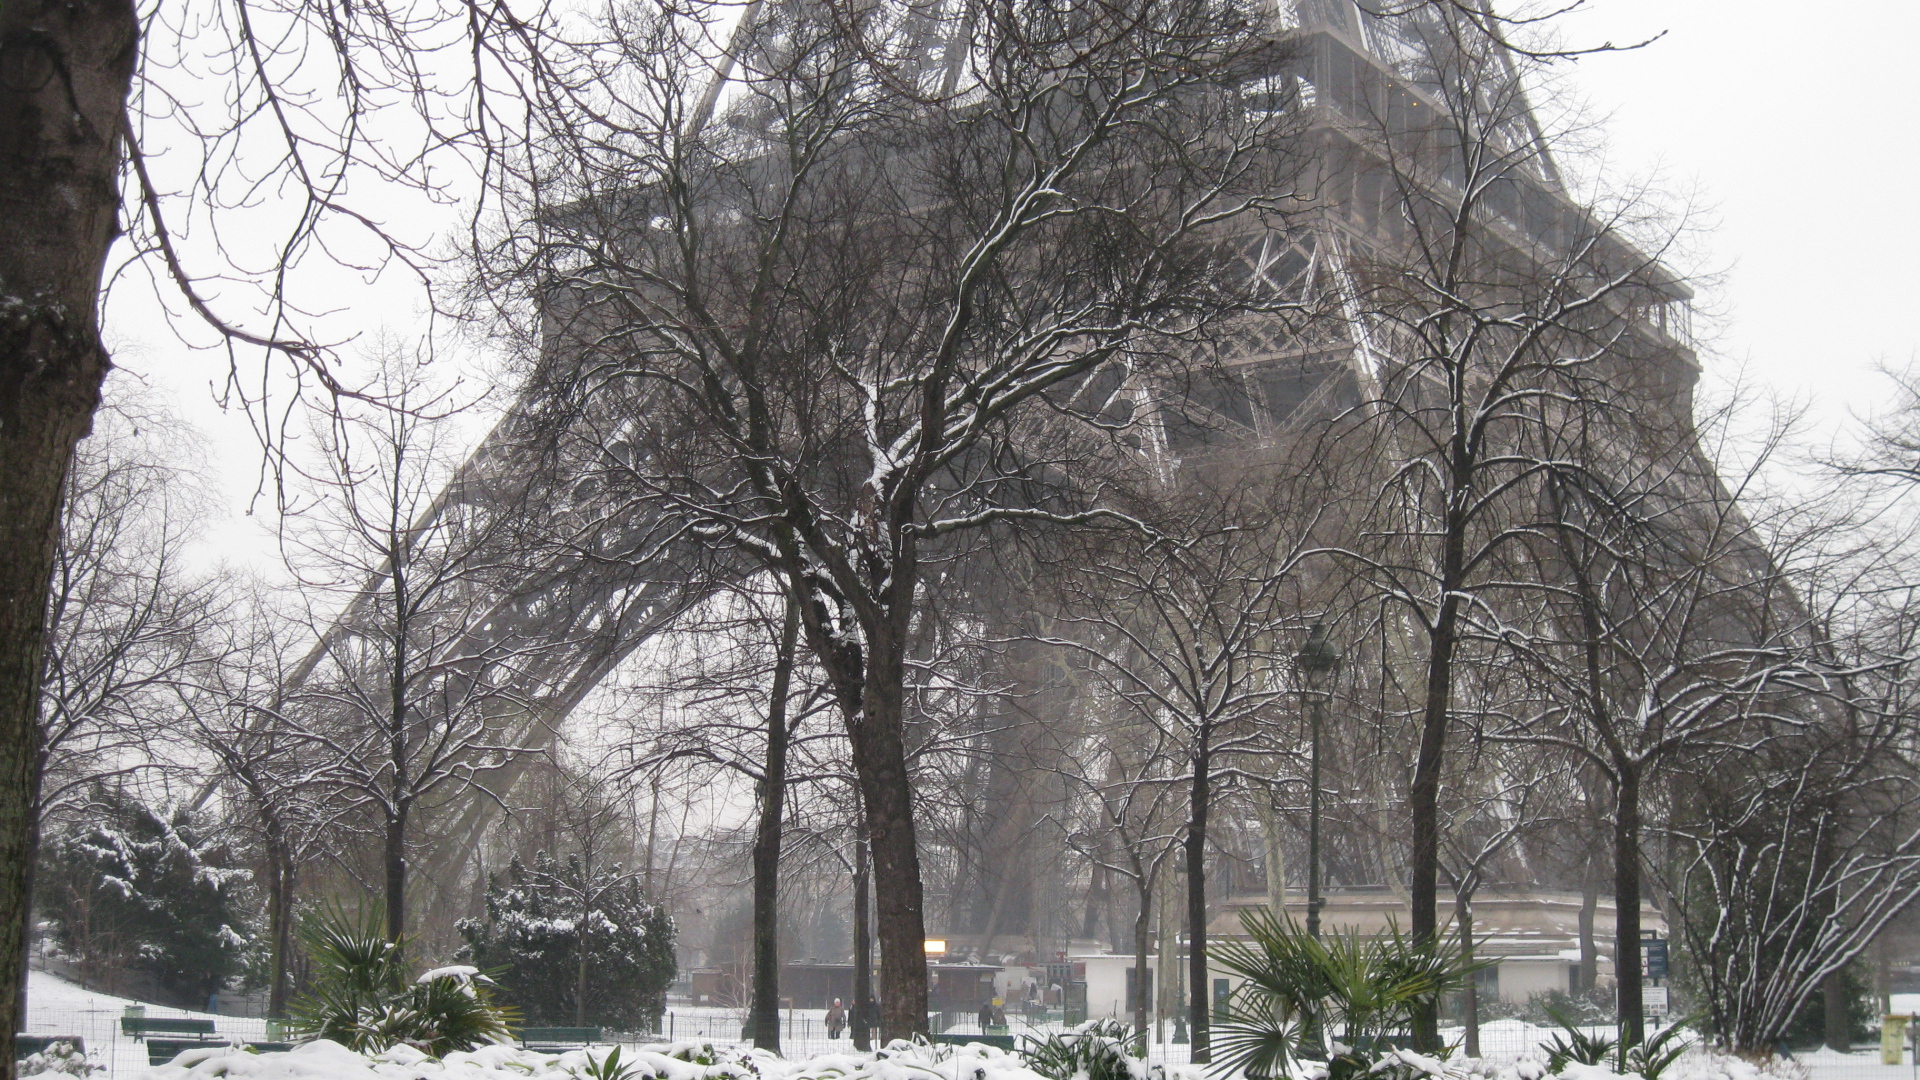 Snow in Paris trees around the Eiffel Tower